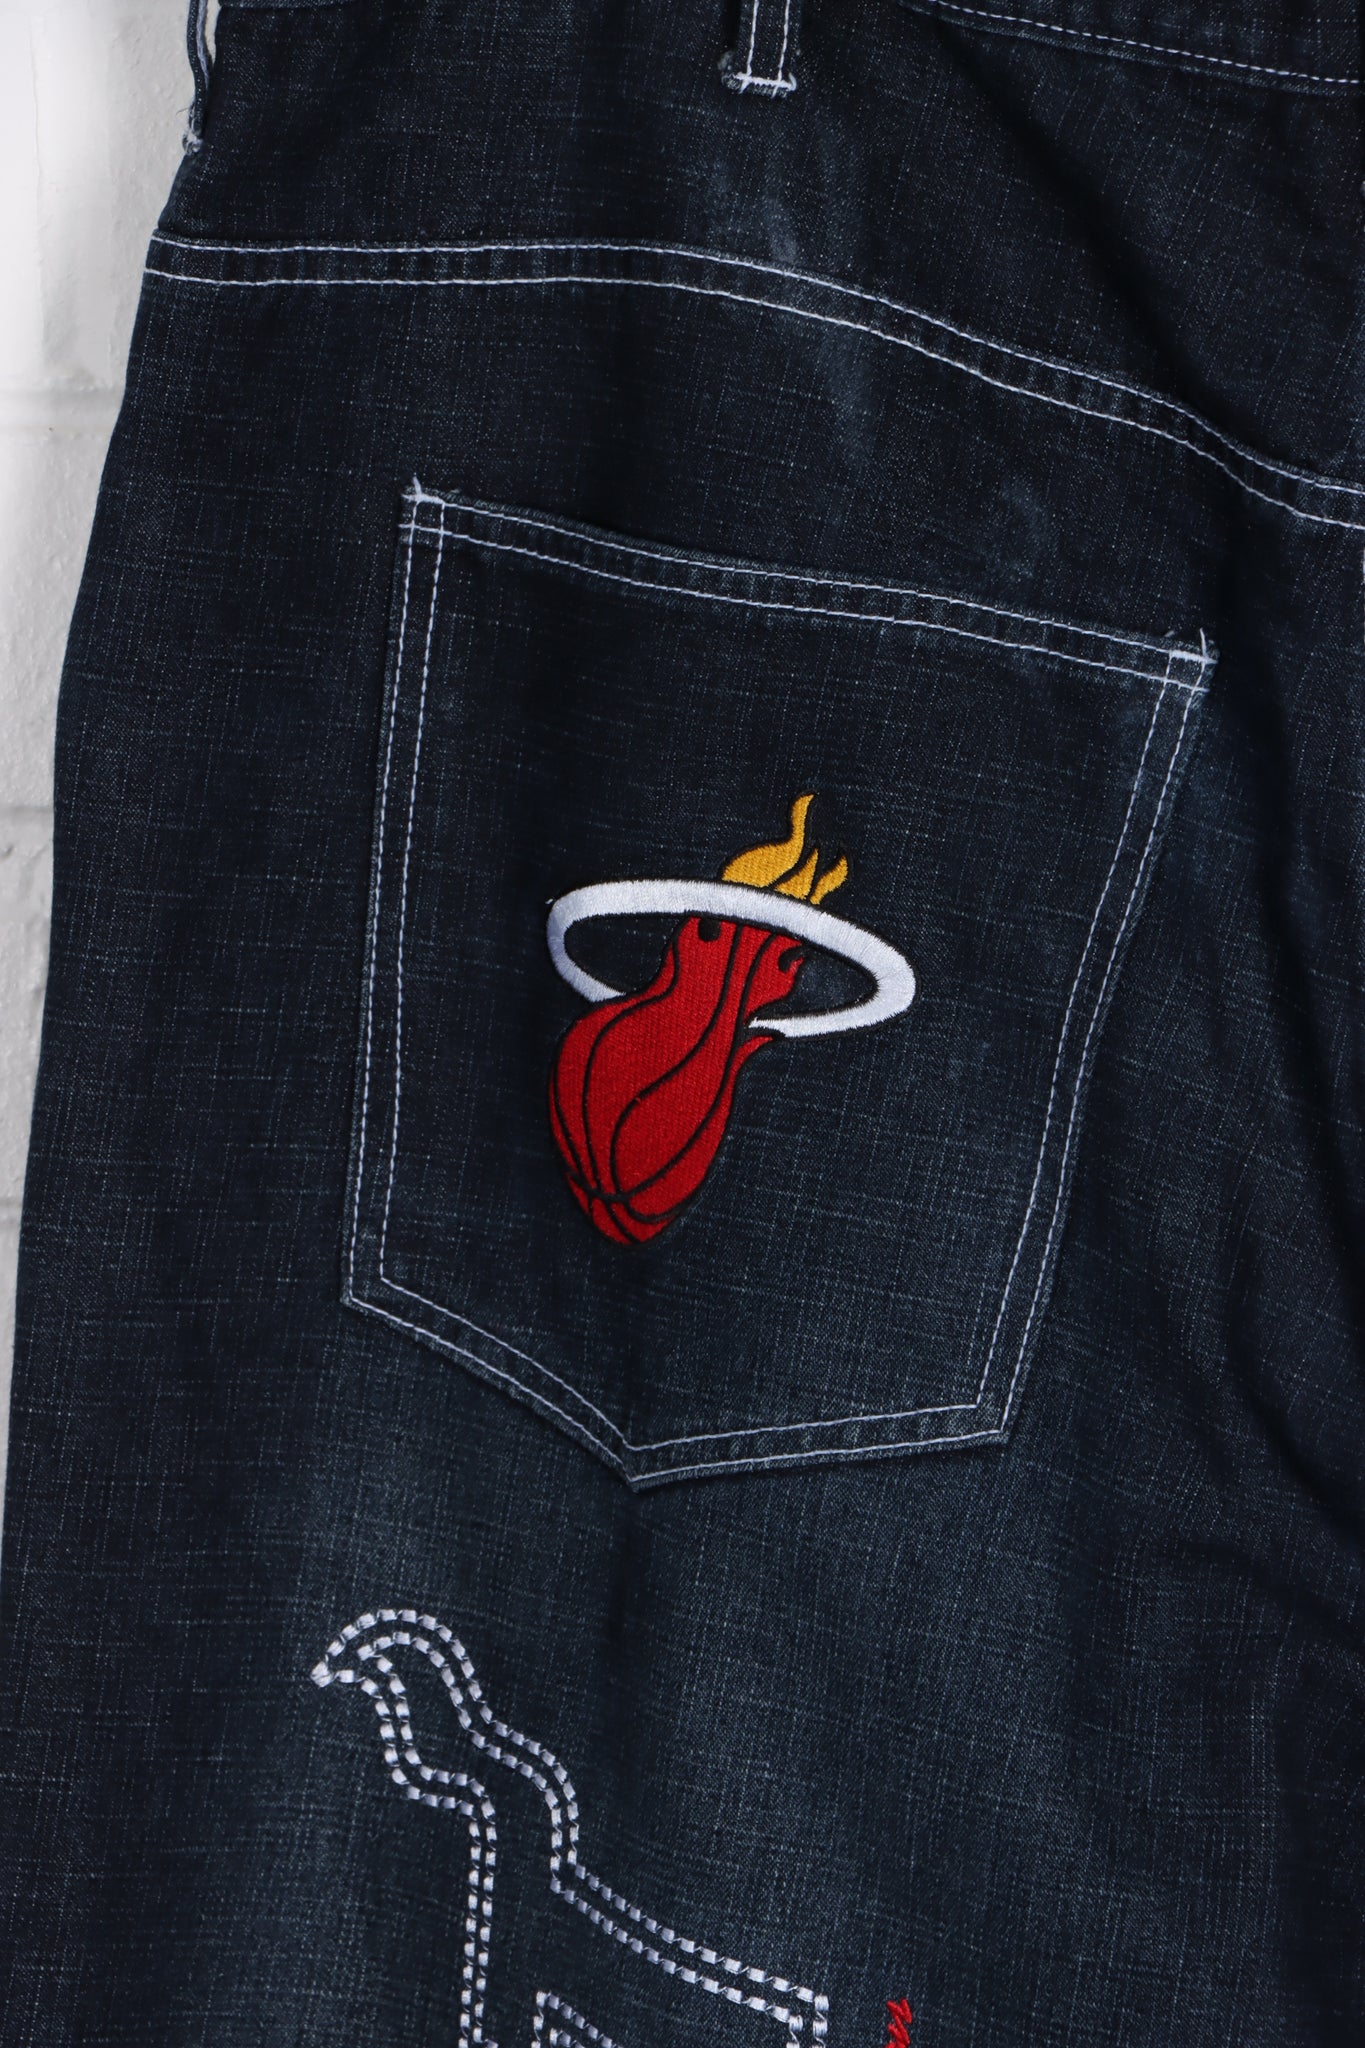 NBA UNK Miami Heat Embroidered Jeans (40)